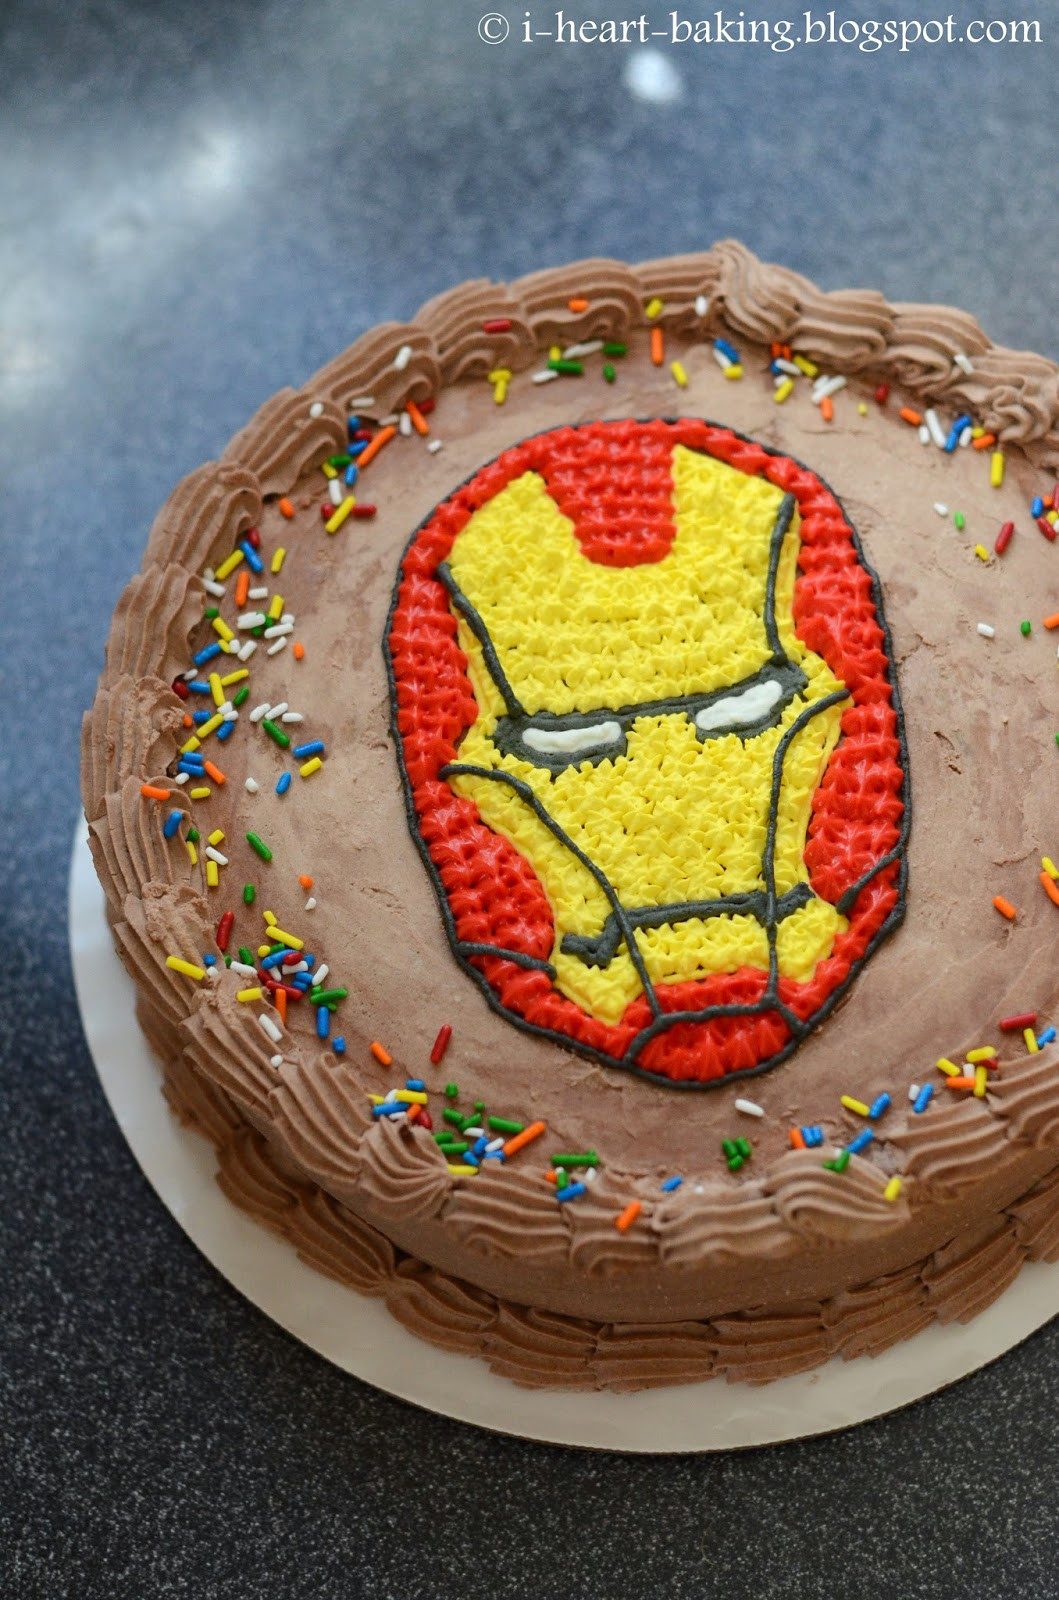 Best ideas about Iron Man Birthday Cake
. Save or Pin i heart baking iron man birthday ice cream cake Now.